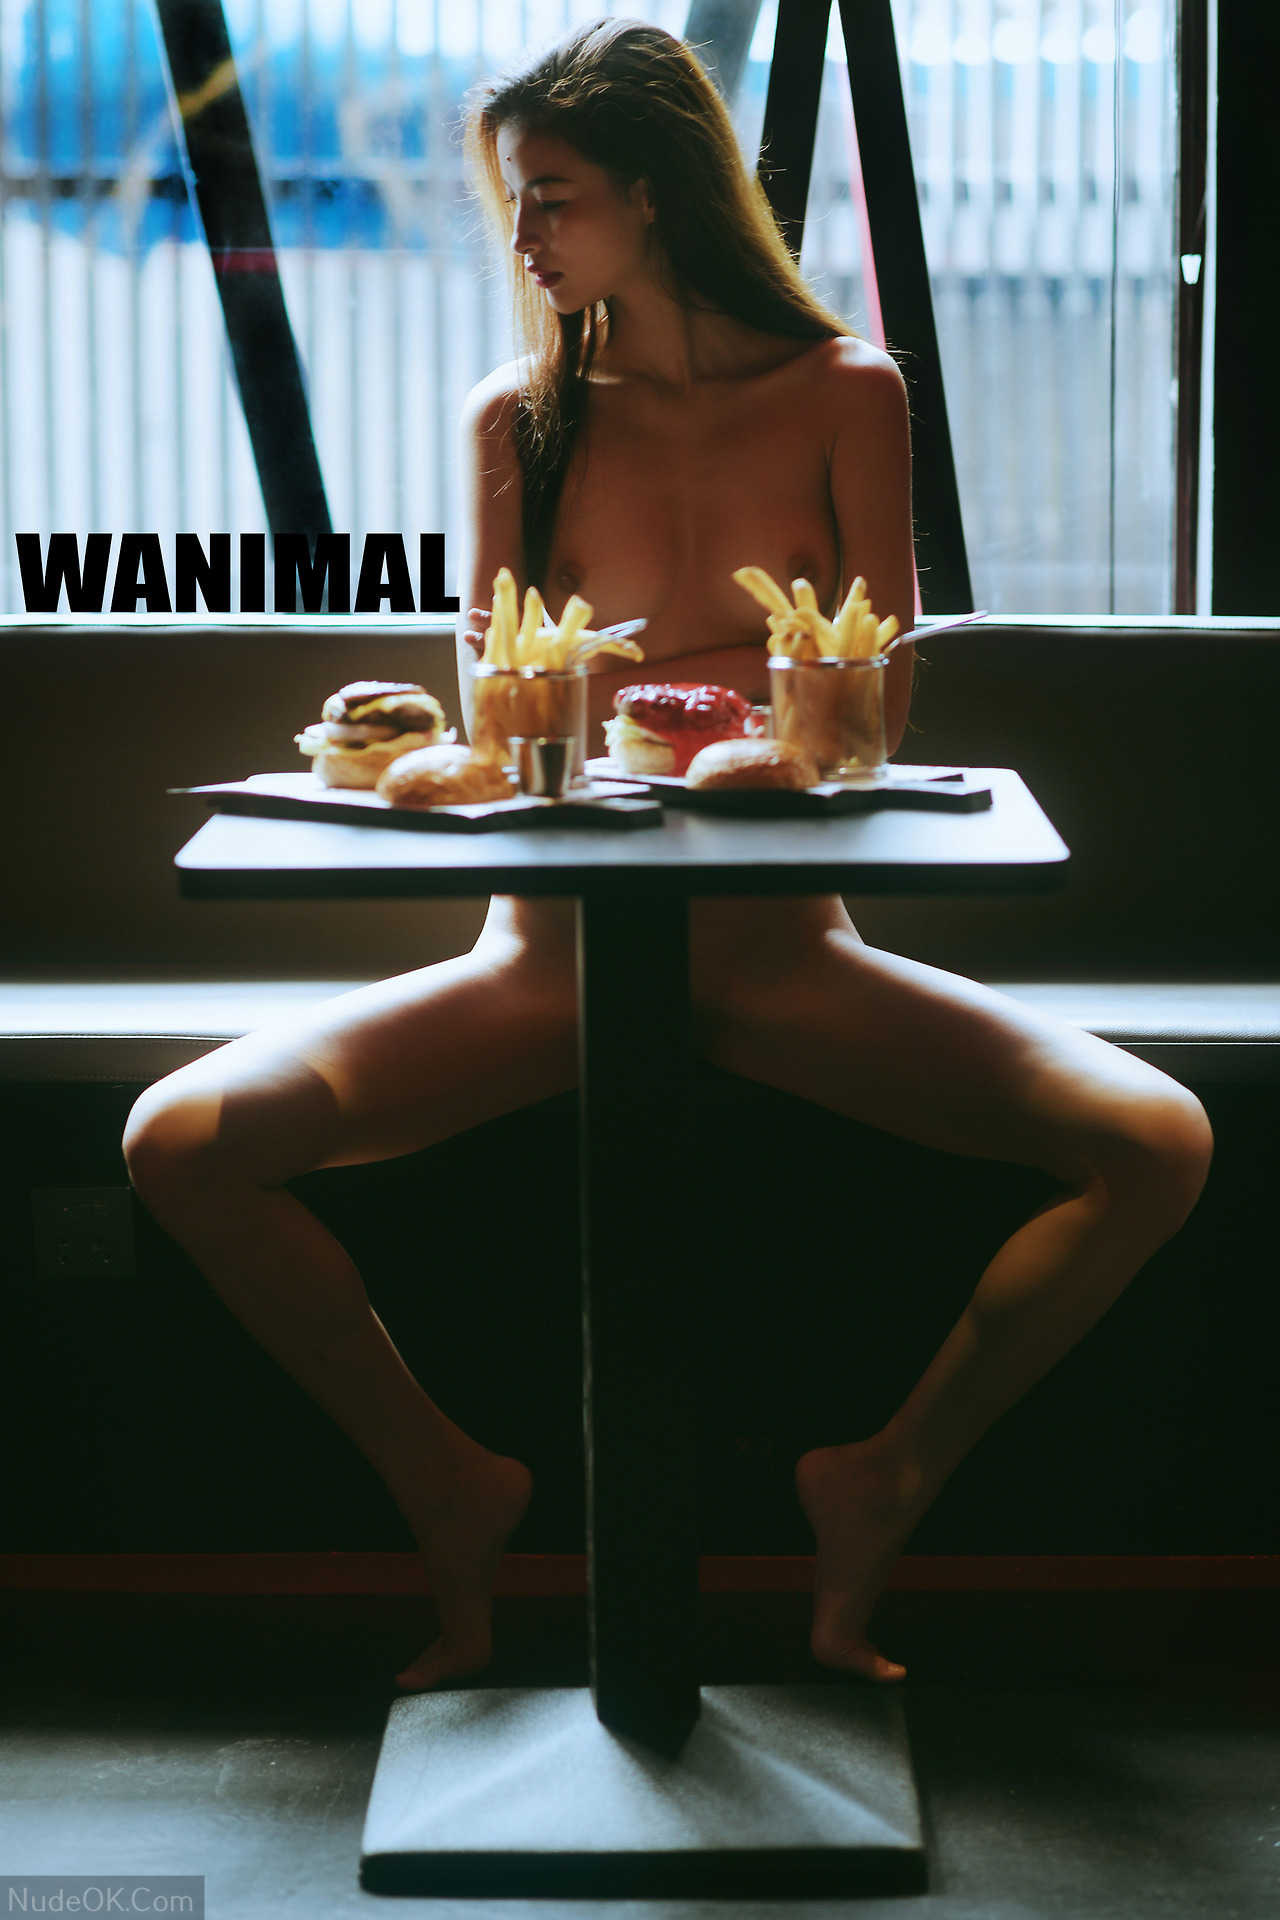 NudeOK.Com Wanimal Photo Album; Model China; Girl Chinese; Nude Pictures; Naked Sexy; NudeOK.Com - 중국 모델 누드 사진 - Wanimal 누드 - 에로틱;  